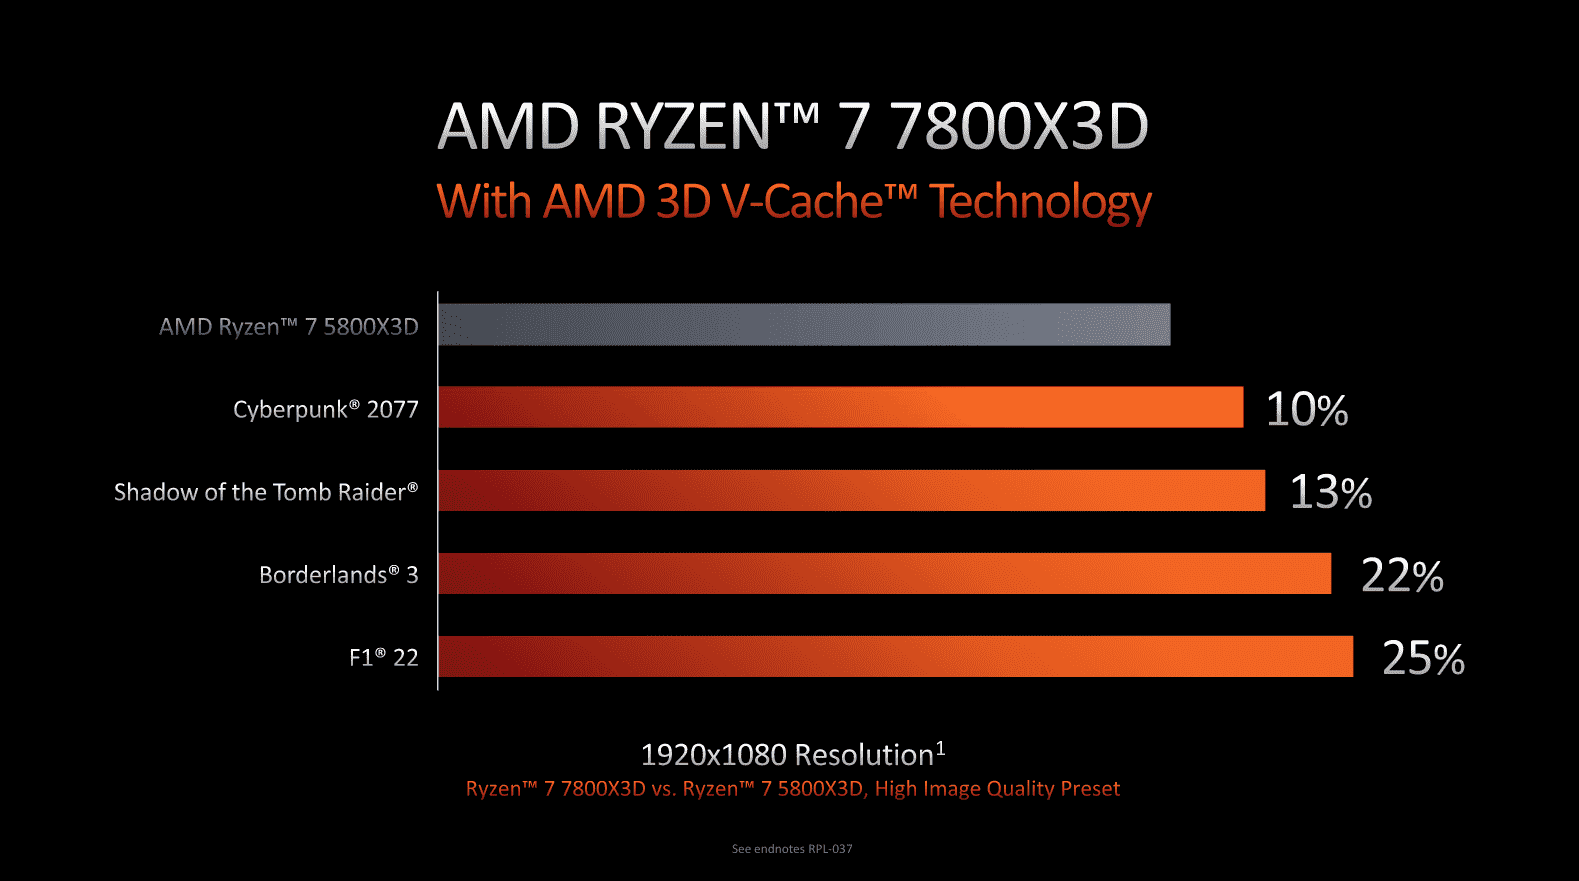 AMD Ryzen 7000 X3D